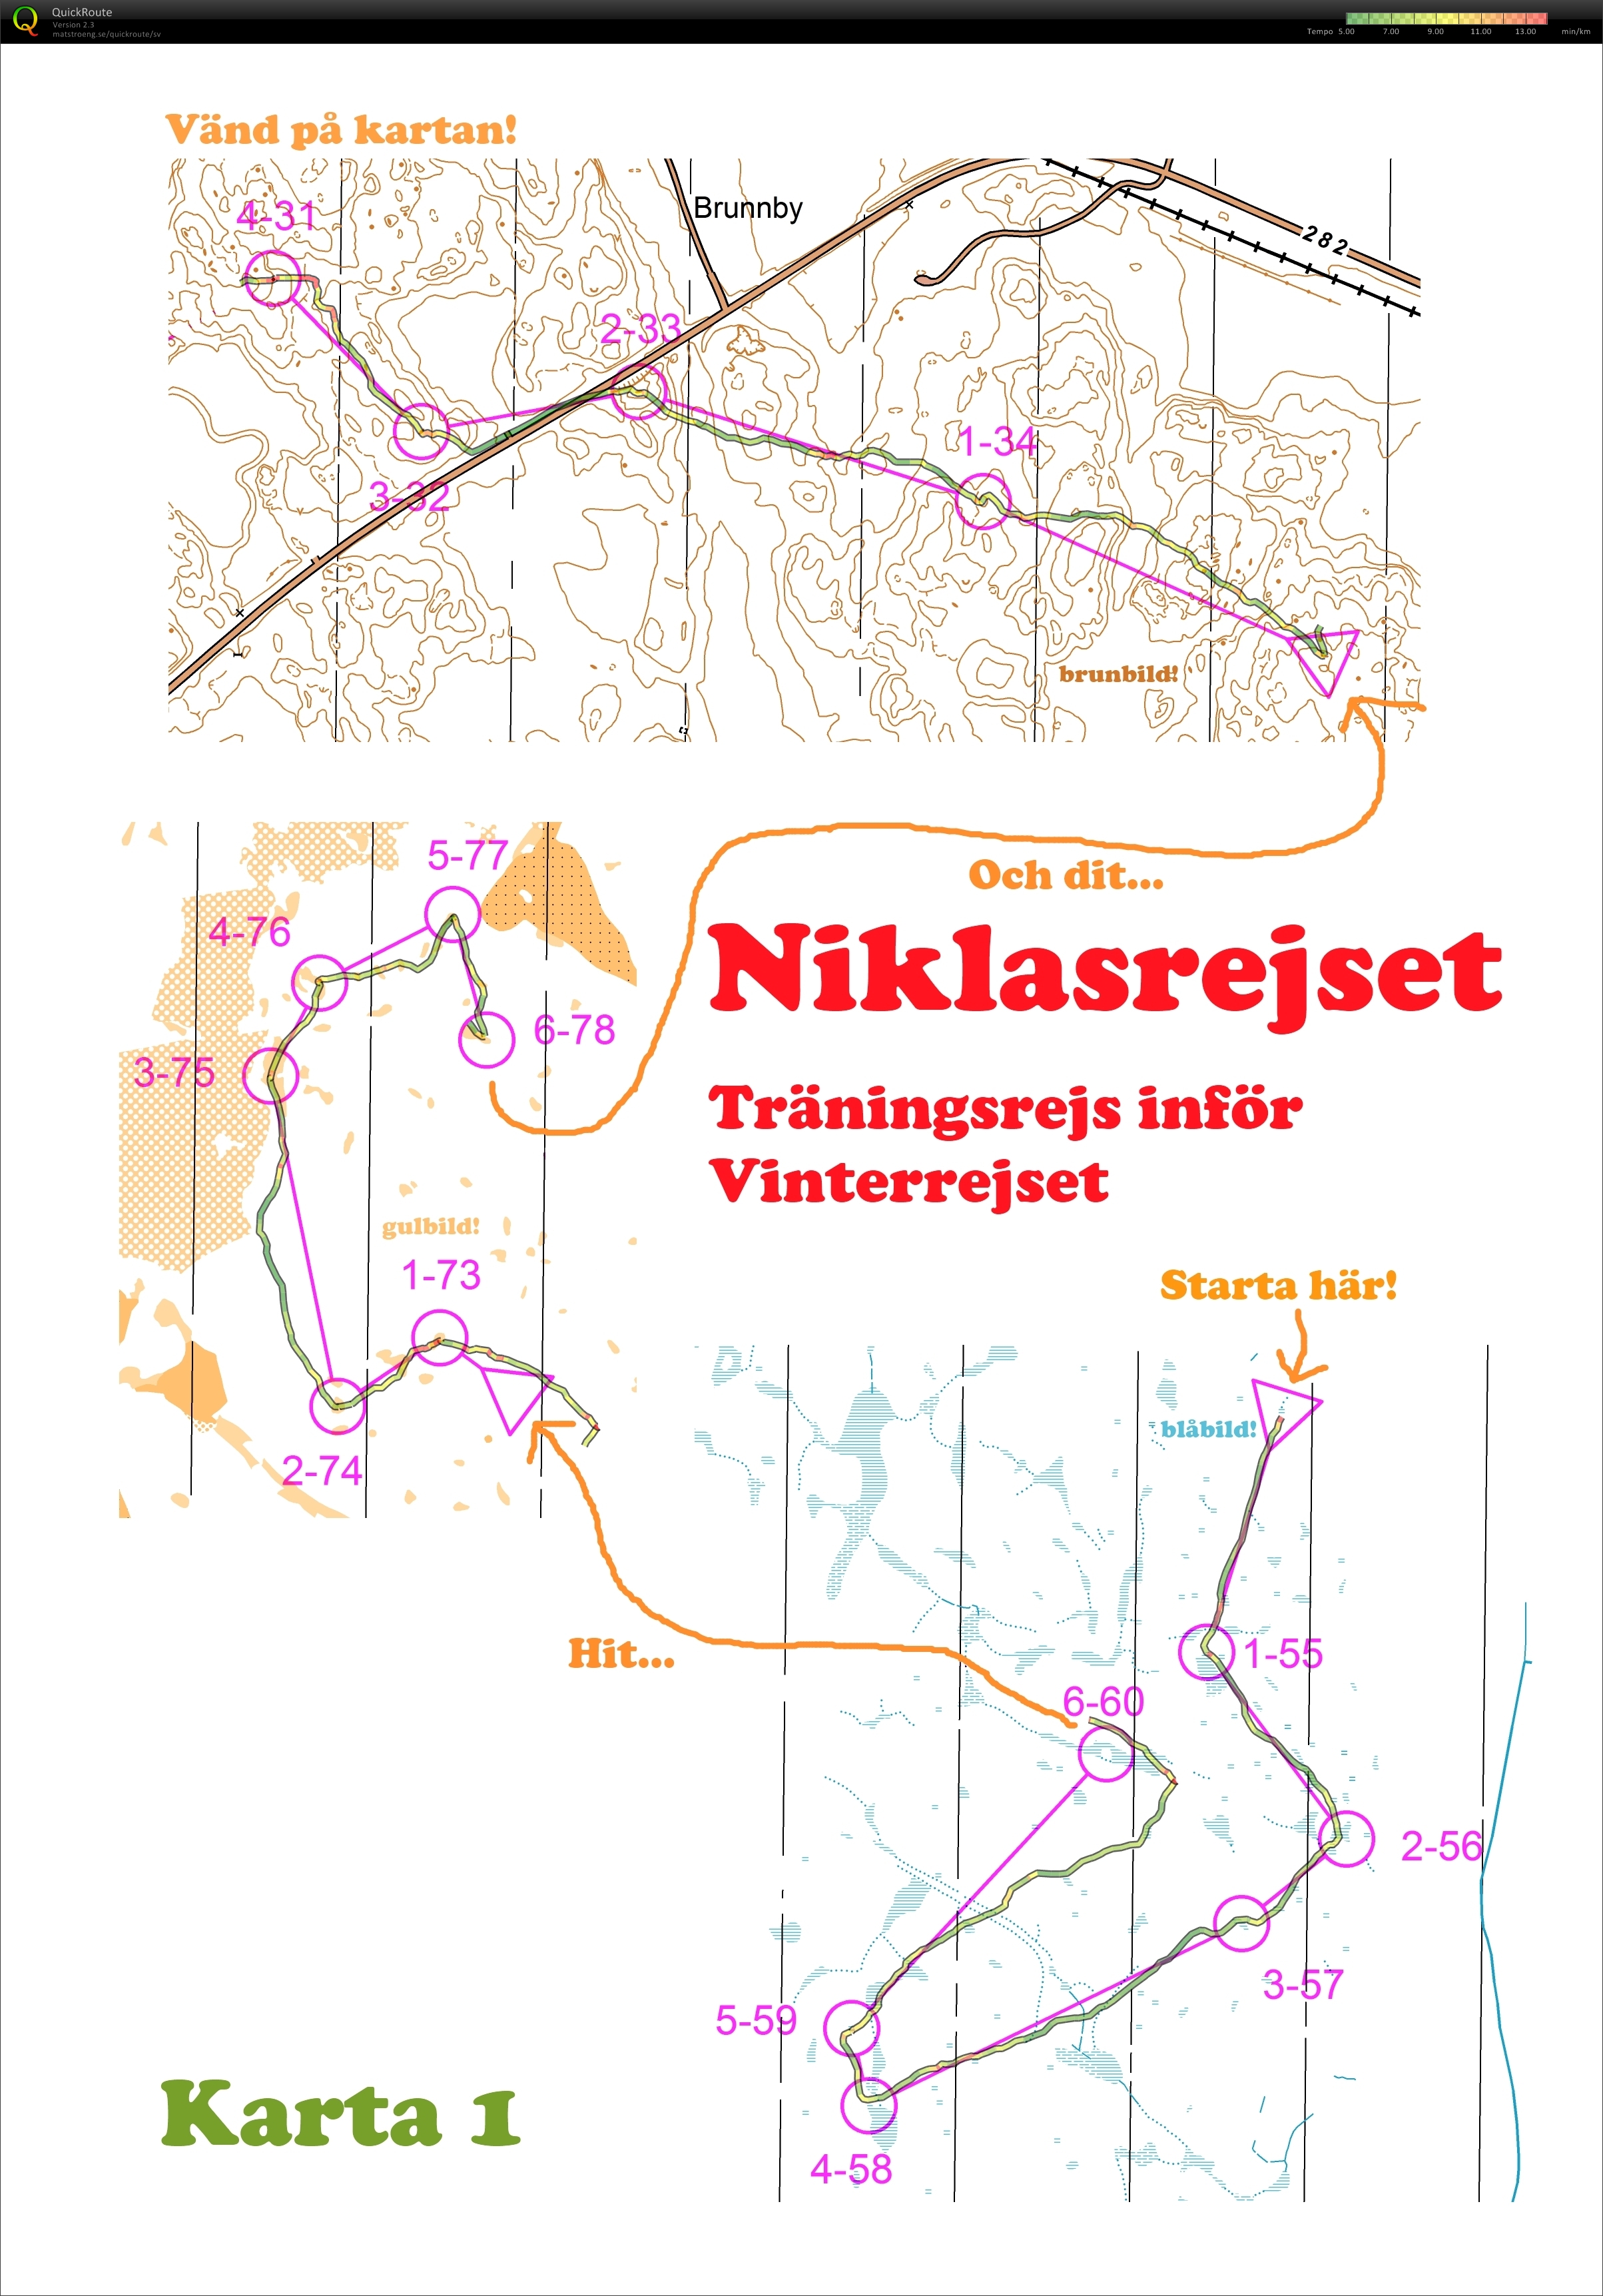 Niklasrejset - karta 1 (2011-08-05)